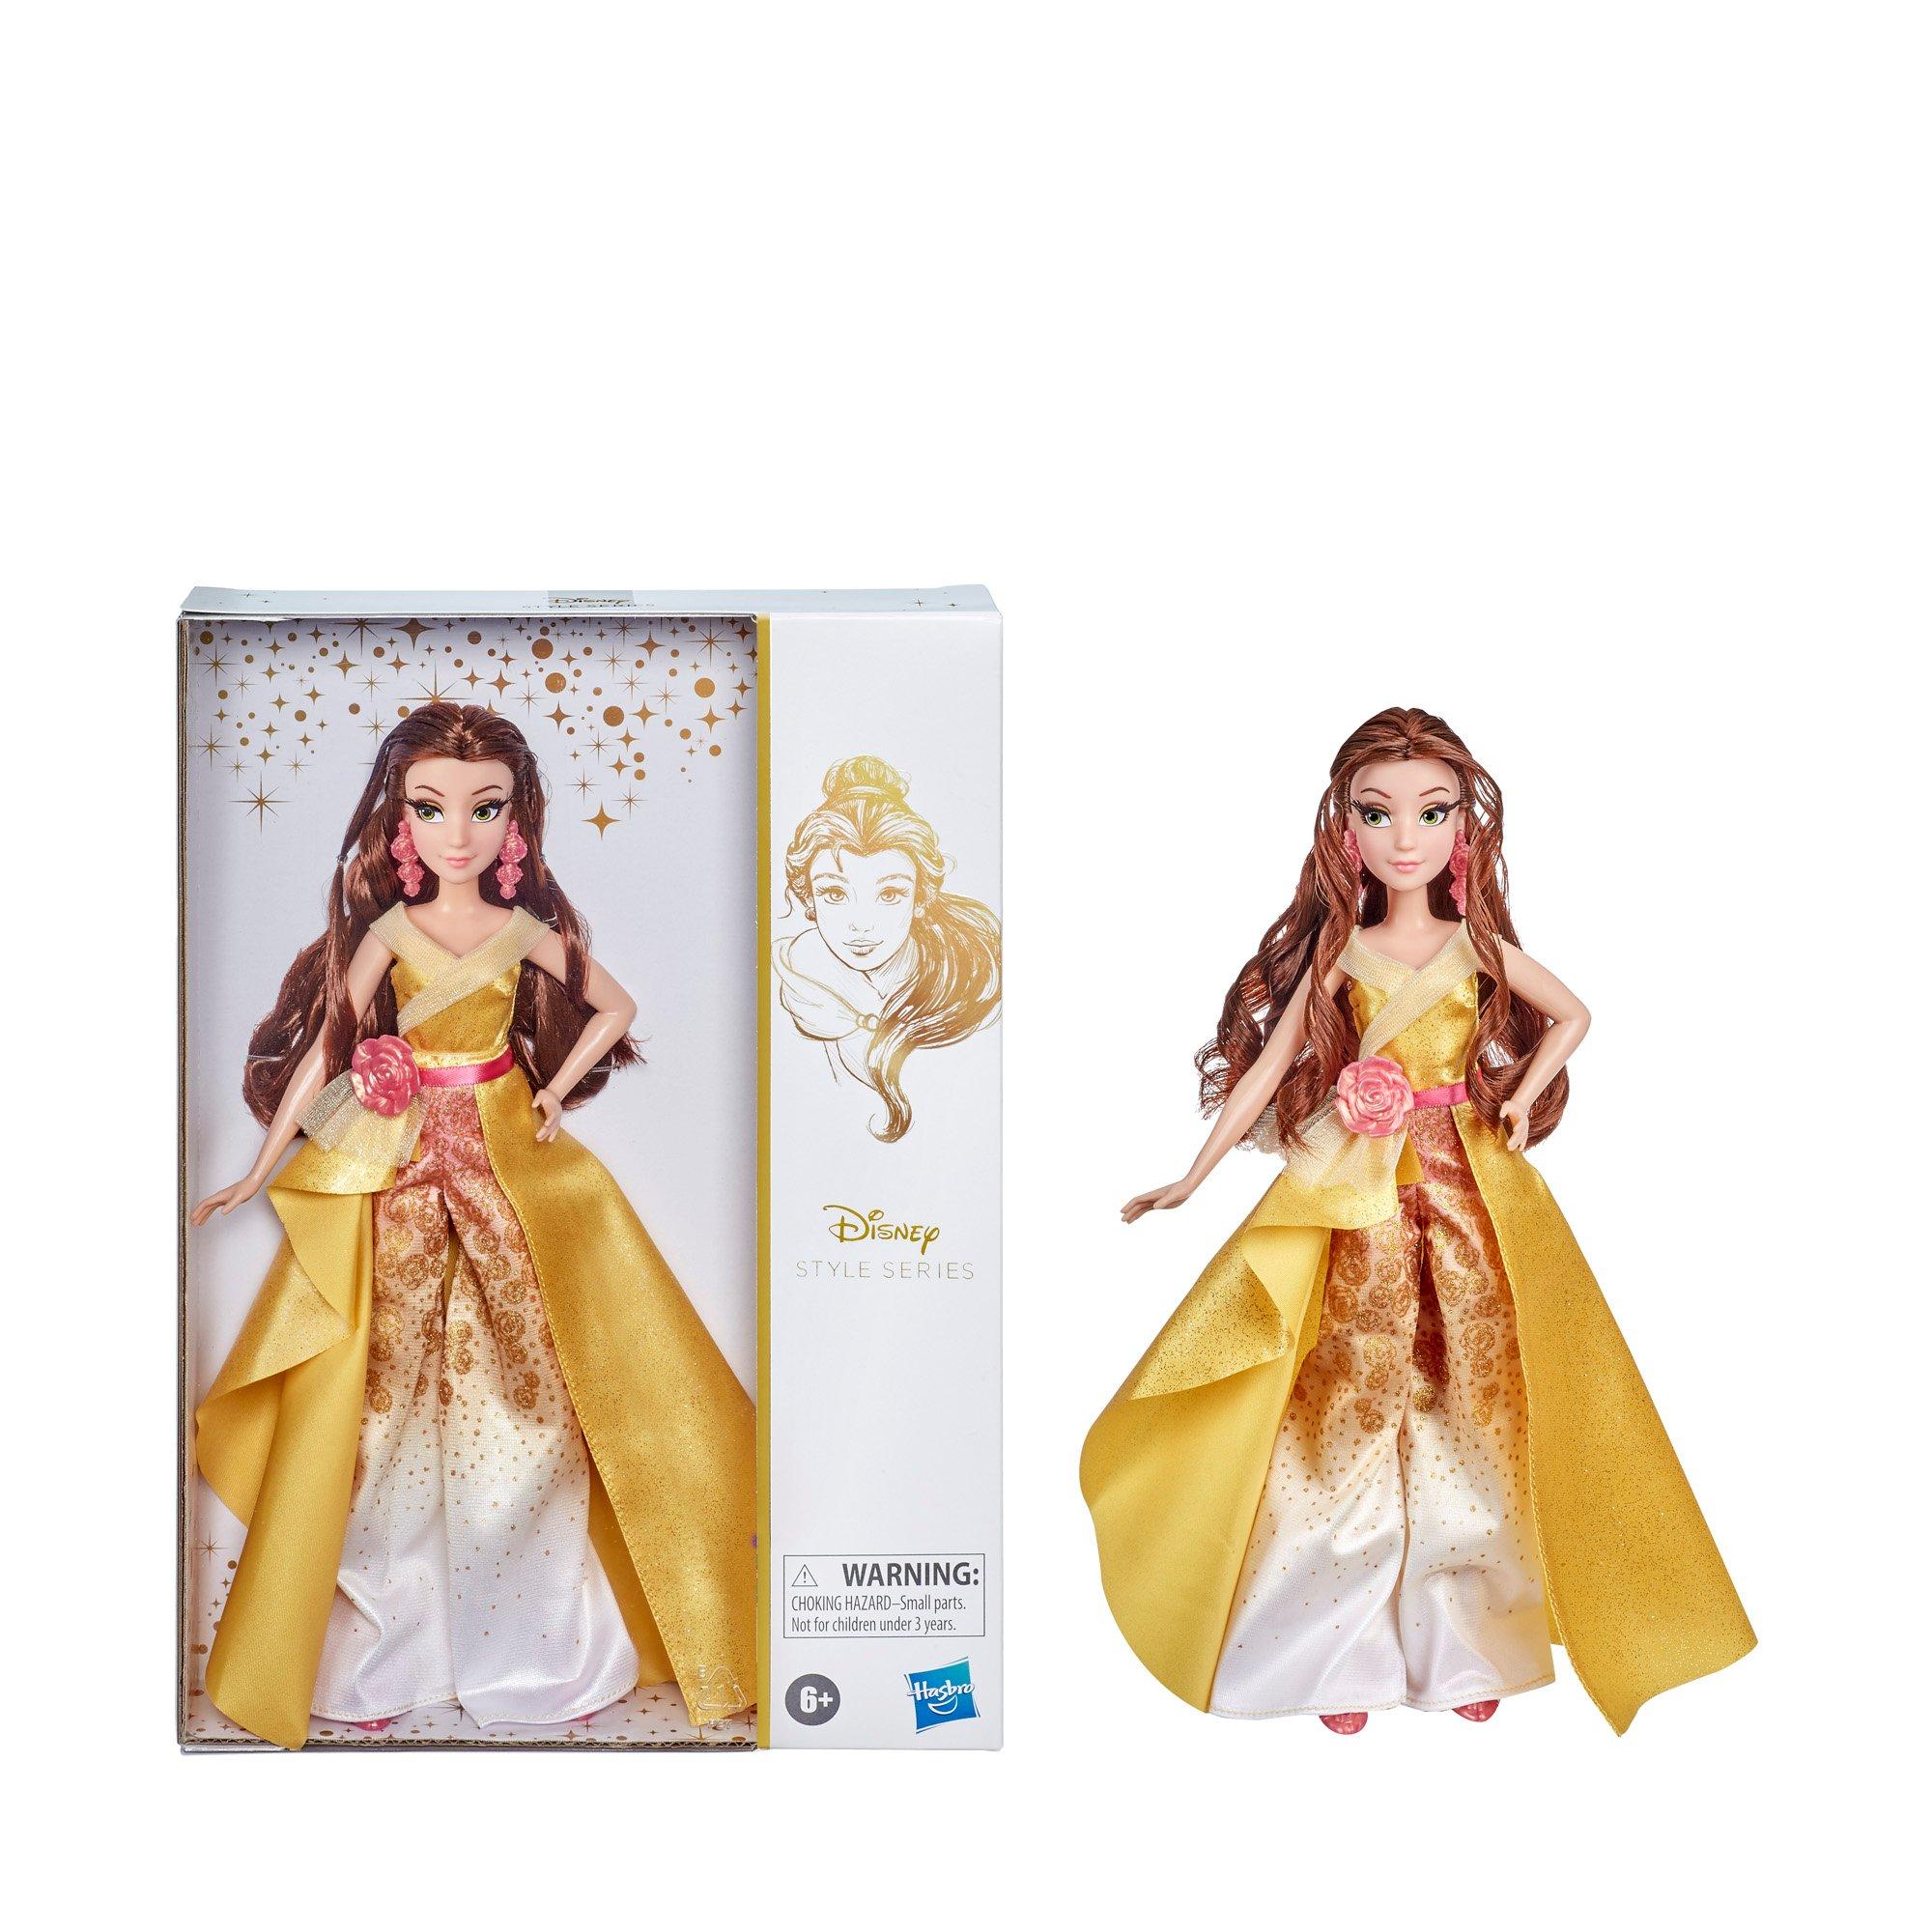 Hasbro  Disney Princess Style Series Belle 2 